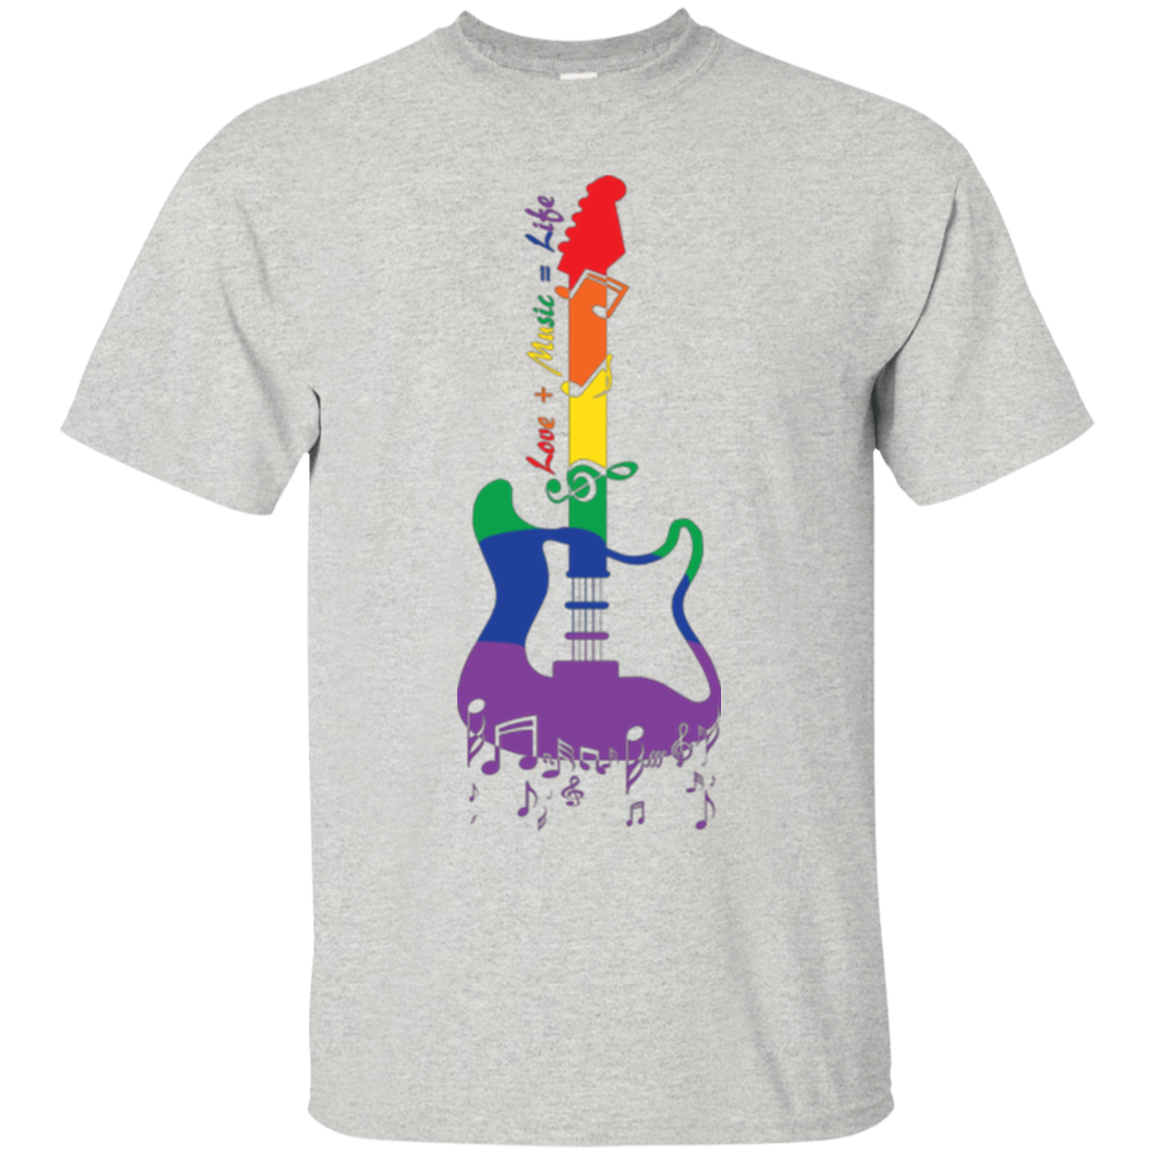 Rainbow Guitar "Love + Music = Life" Pride grey T Shirt for music lover 